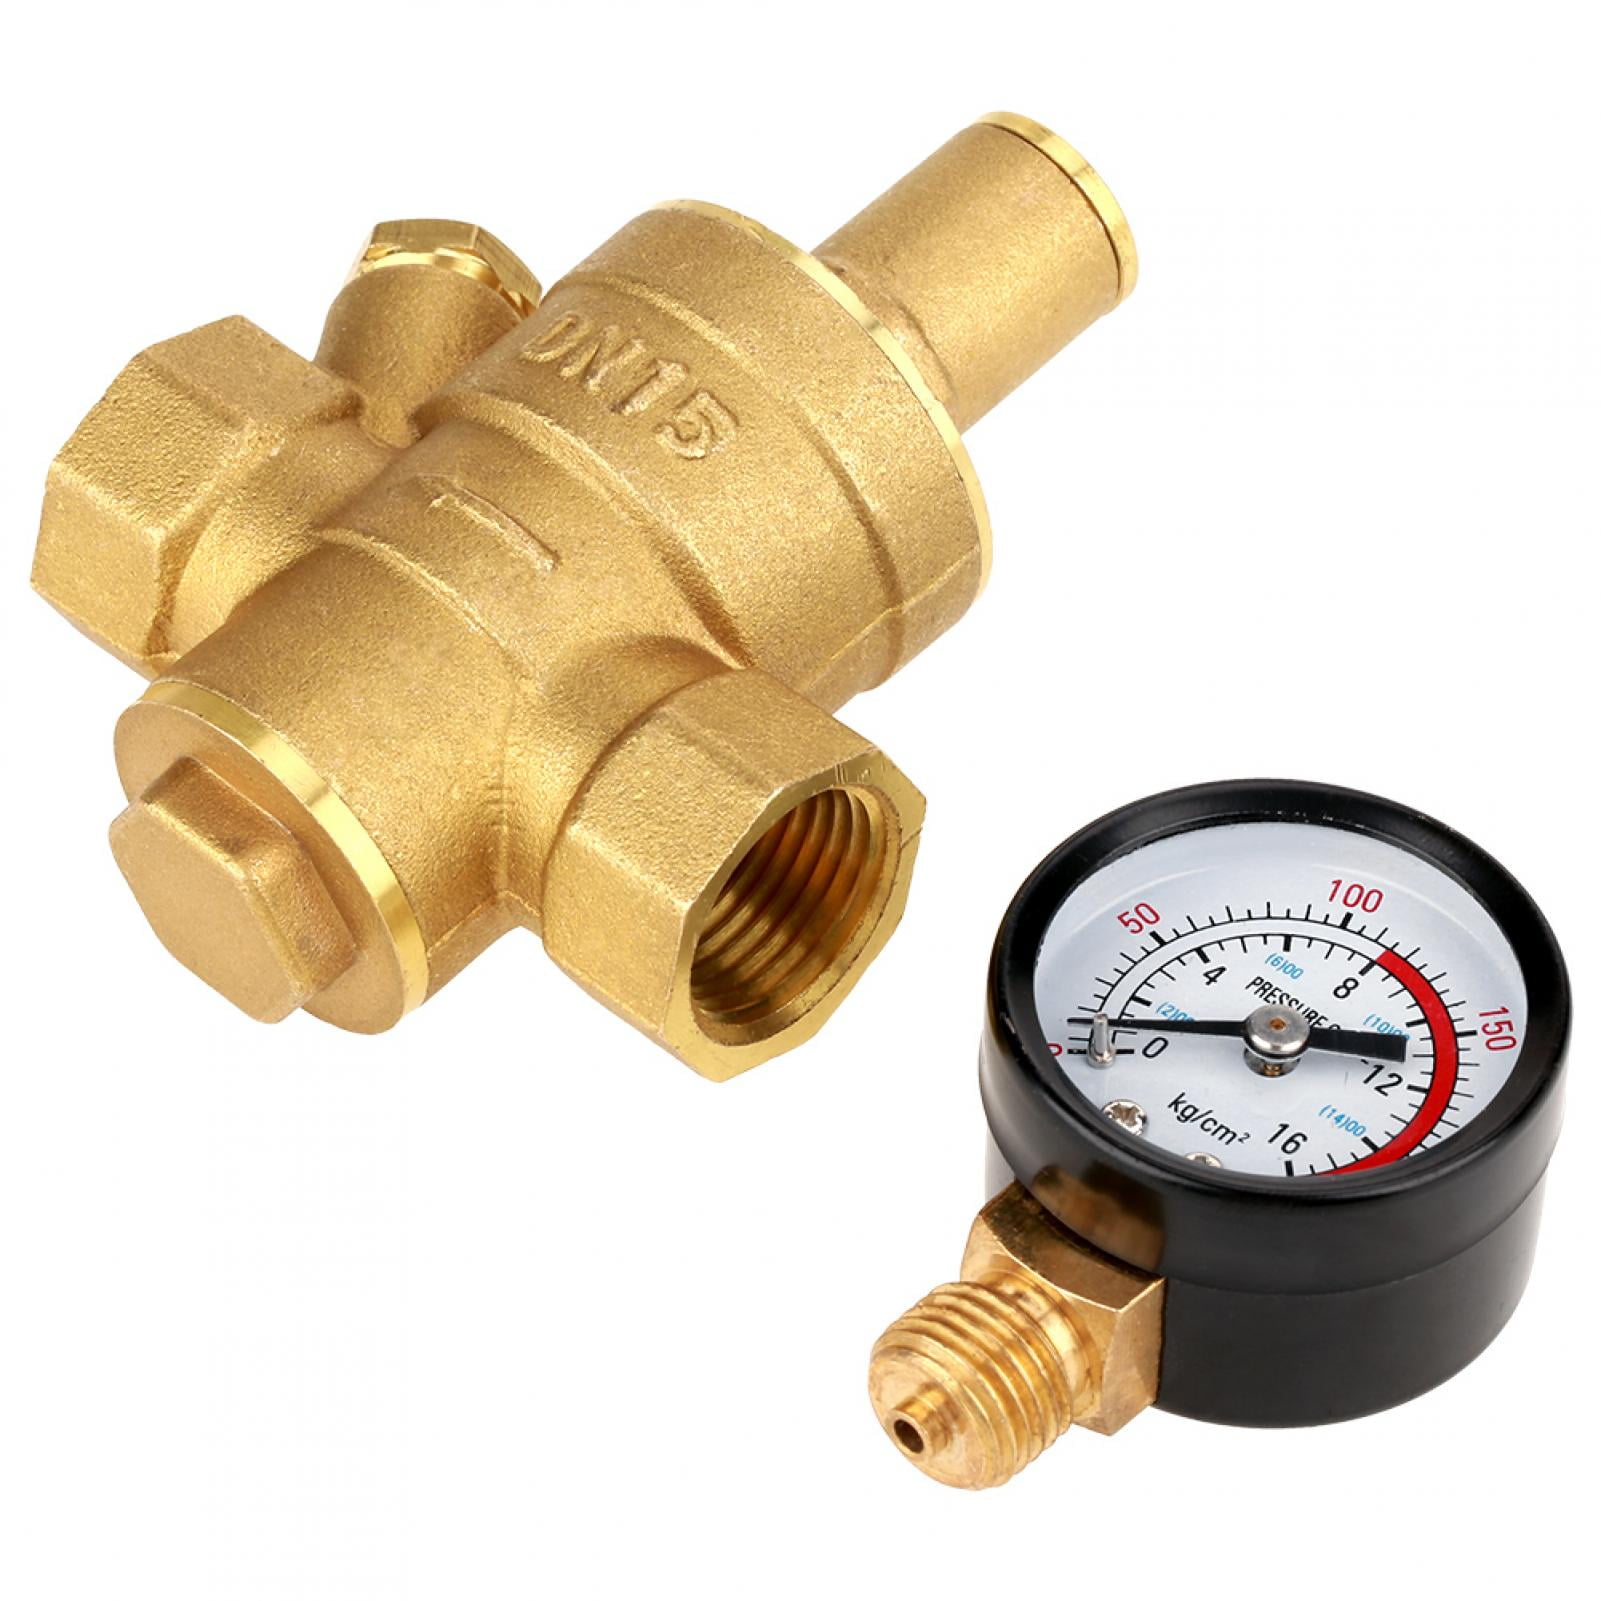 Adjustable DN15 Water Pressure Regulator NPT 1/2" Brass Reducer Gauge Meter Tool 